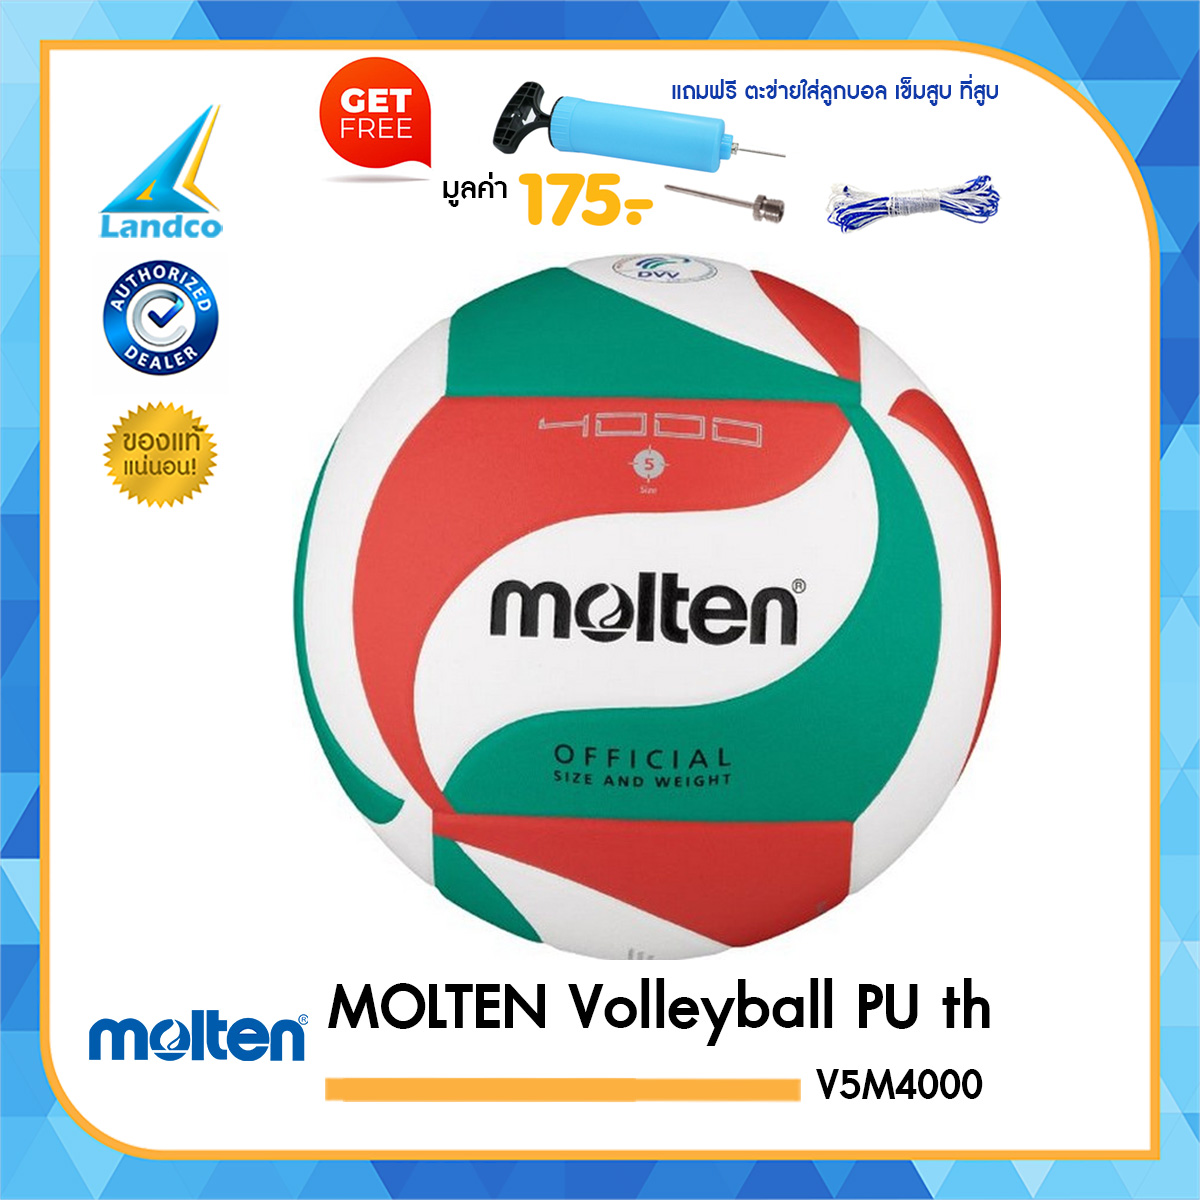 Molten Volleyball MOT PU รุ่น V5M4000 แถมฟรี ตาข่ายใส่ลูกวอลเลย์บอล + เข็มสูบสูบลม + สูบมือ SPL